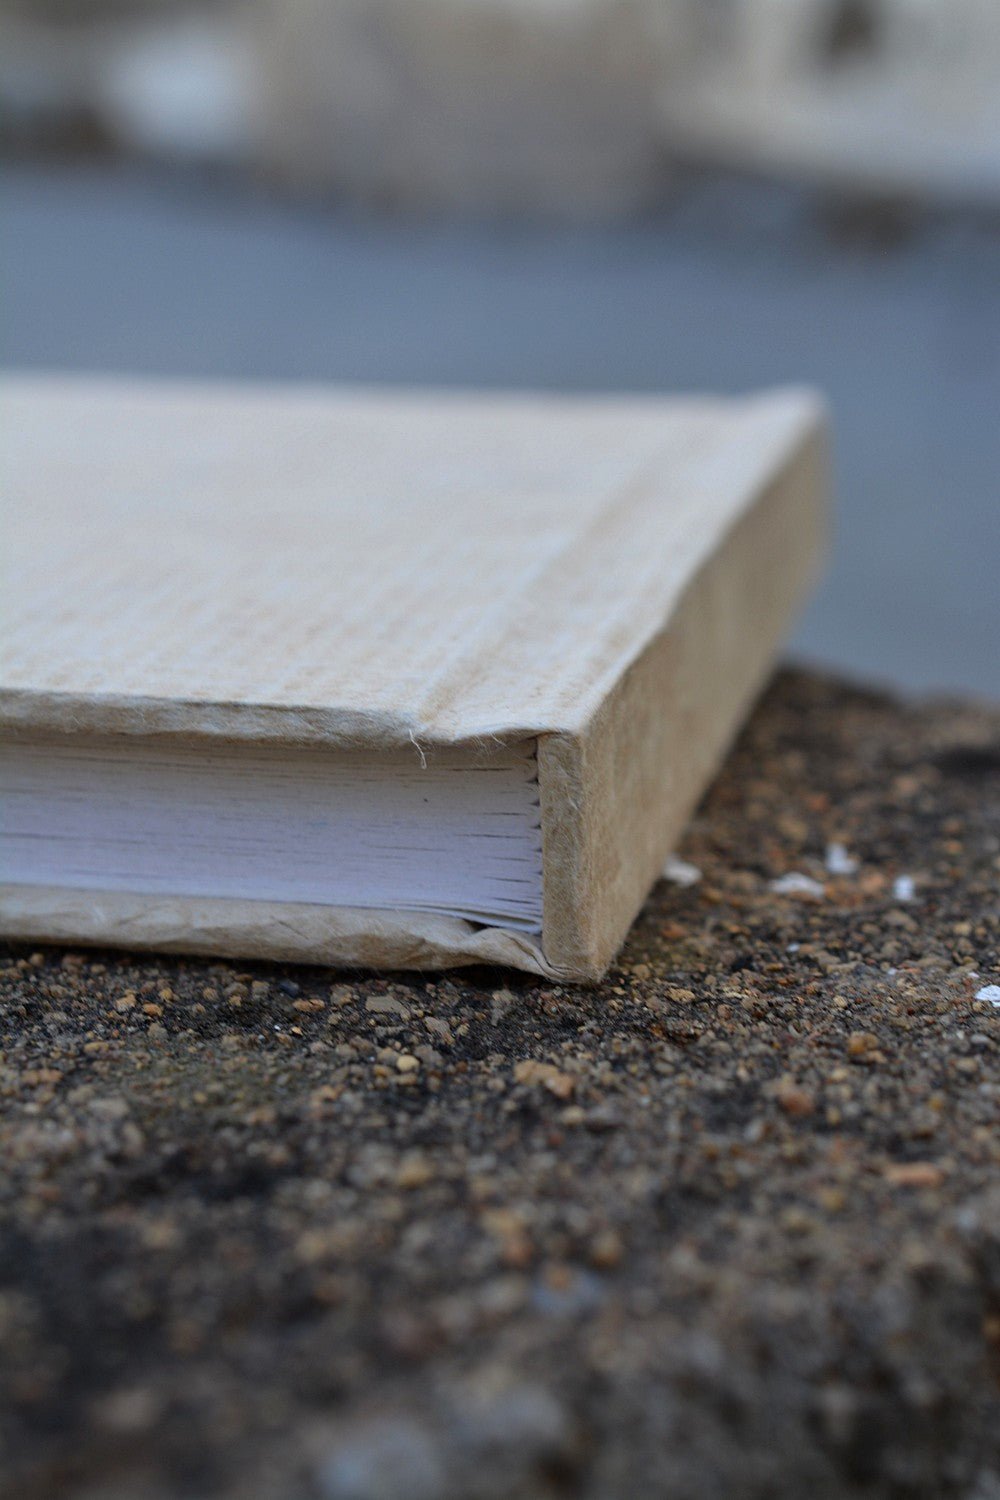 Deckle Edge Handmade Paper Journal. - metaphorracha